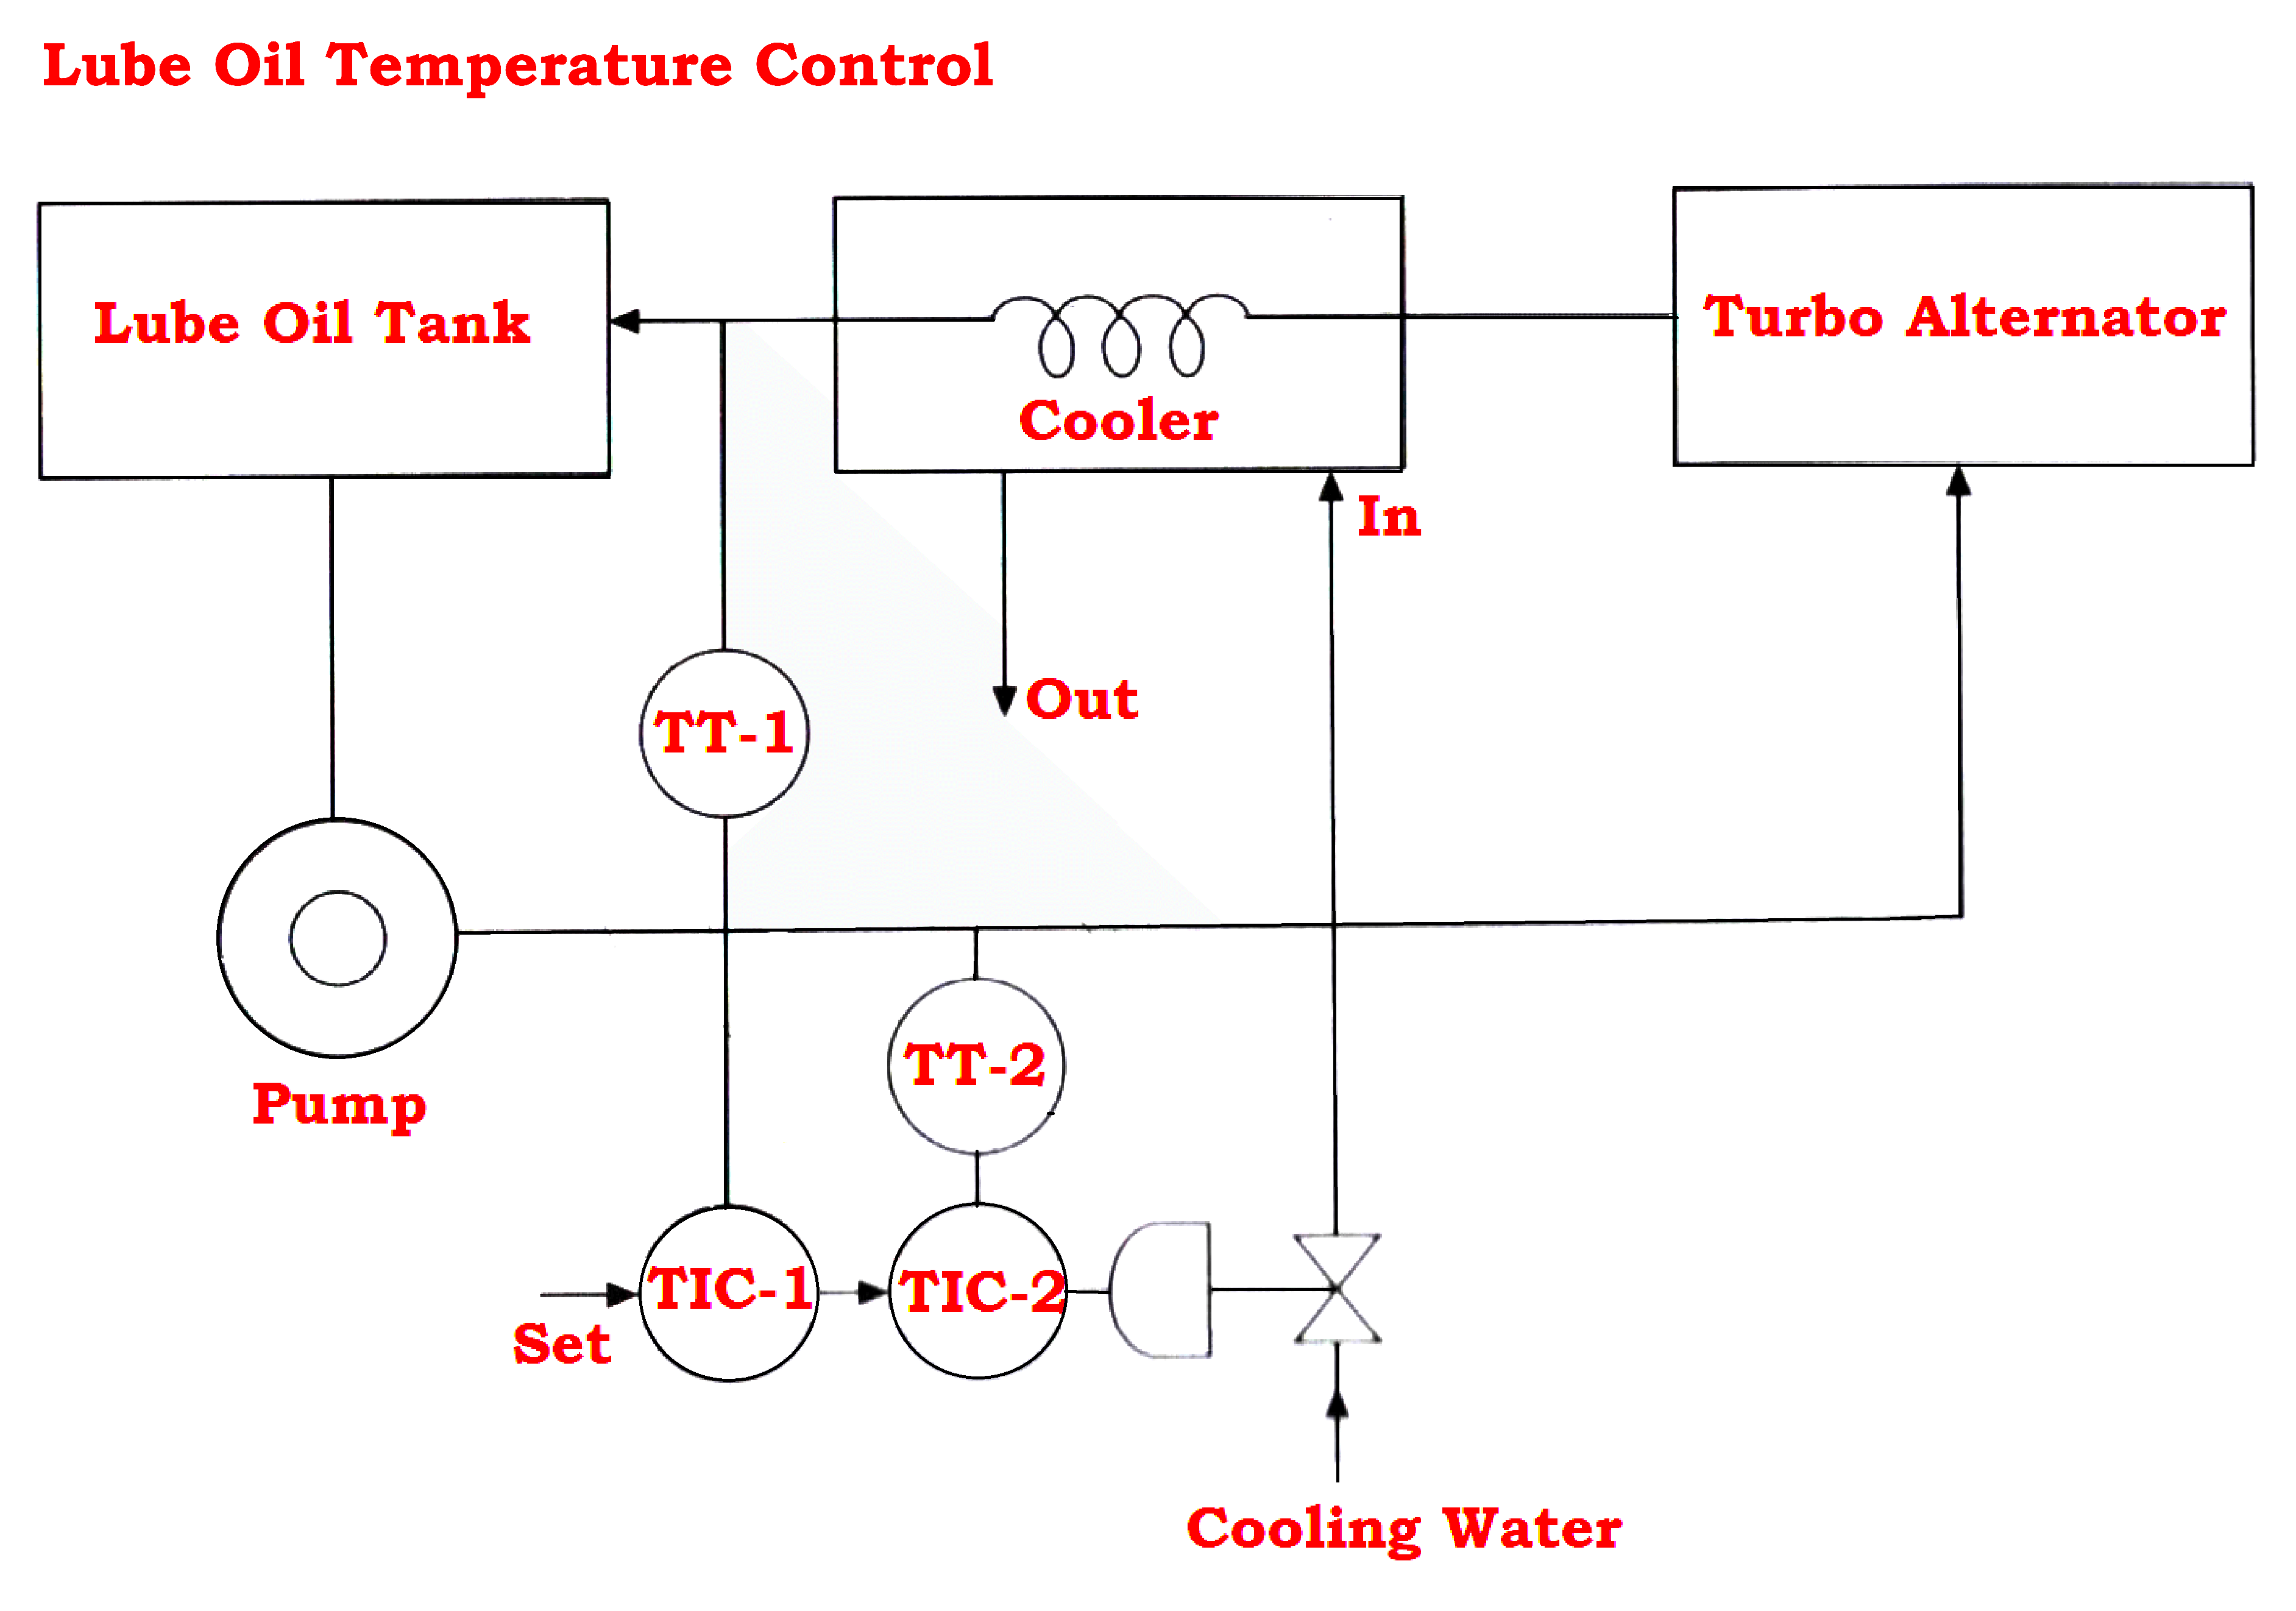 Turbo Alternator Lubrication Oil Temperature Control System